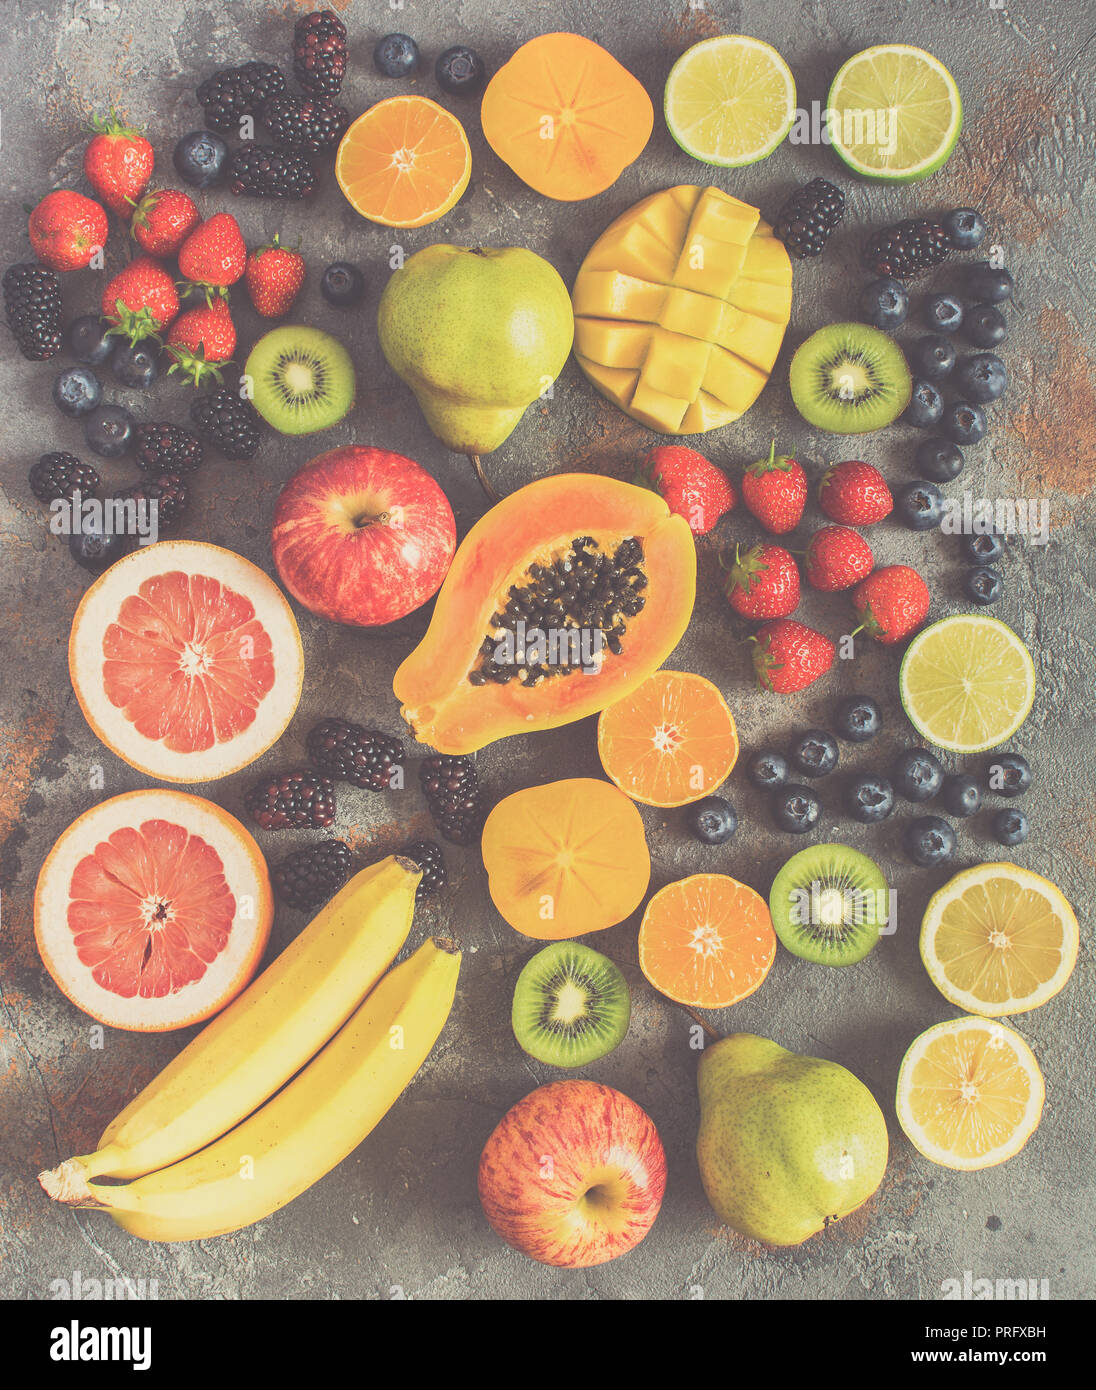 Diversi frutti arcobaleno, fragole, mirtilli, mango, arancia, pompelmo, banana, mela, uva da tavola, kiwi su sfondo grigio, vista sopra, tonica Foto Stock